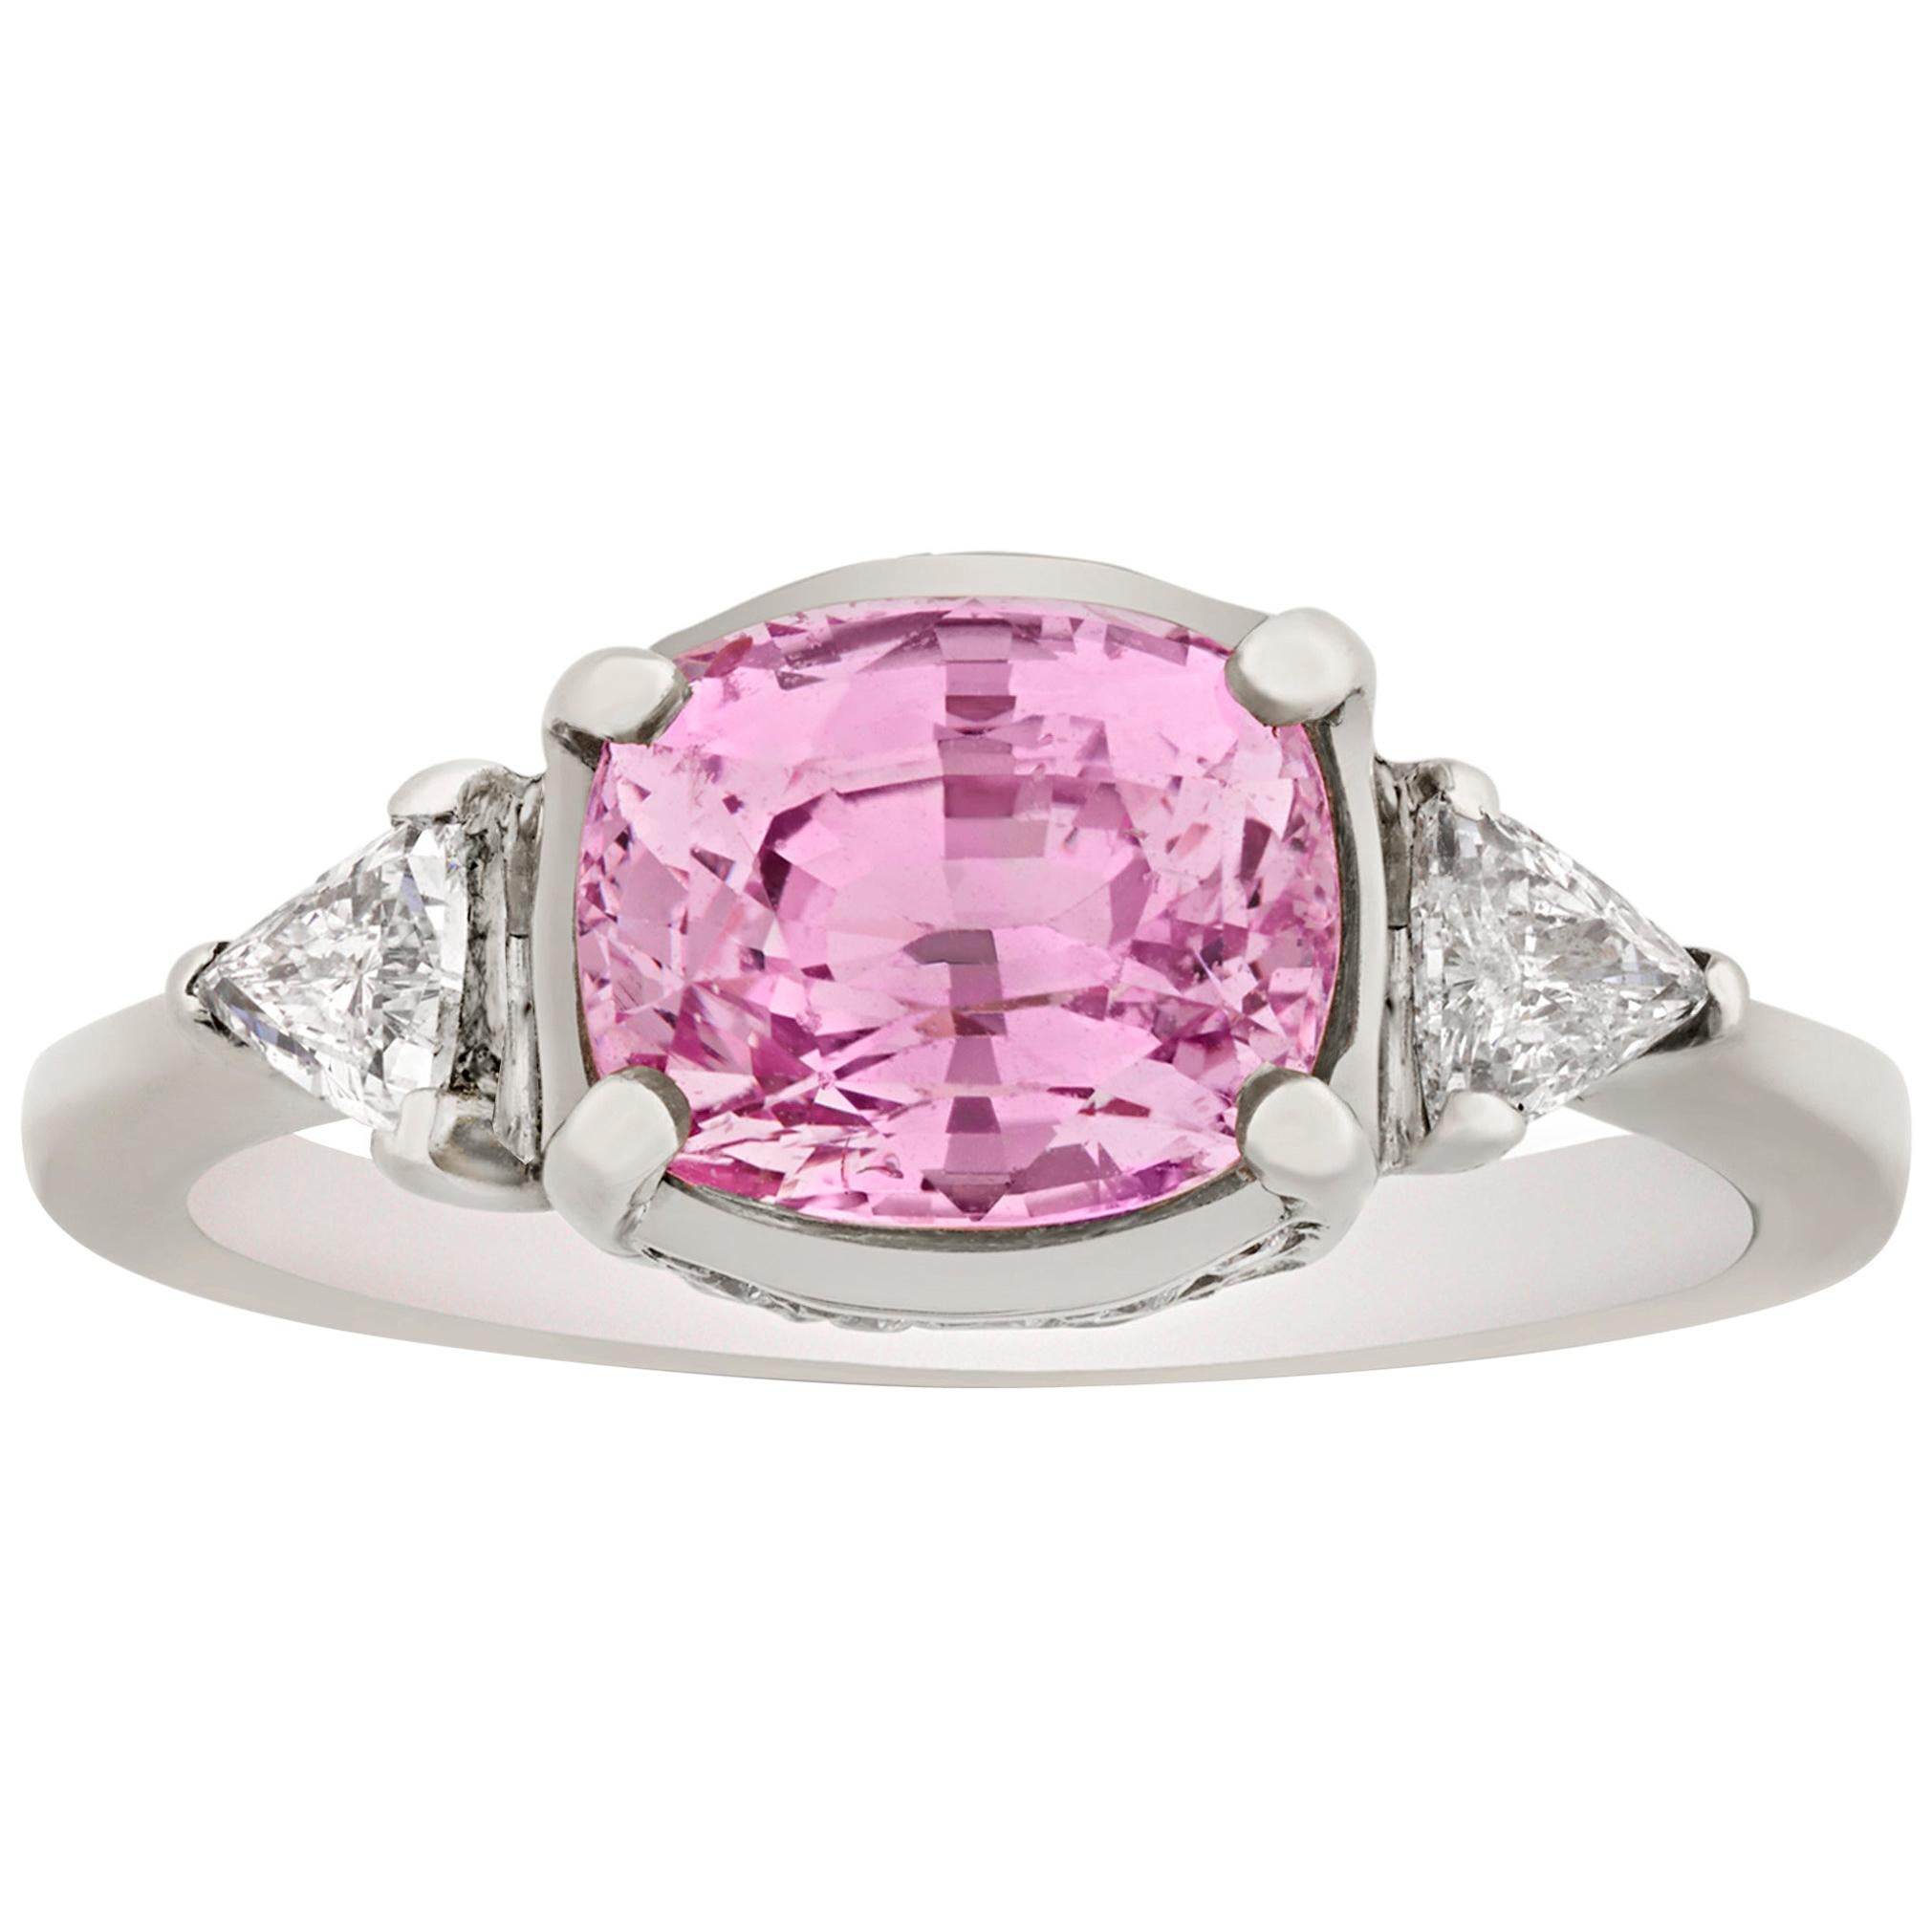 Pink Sapphire Ring, 3.21 Carat